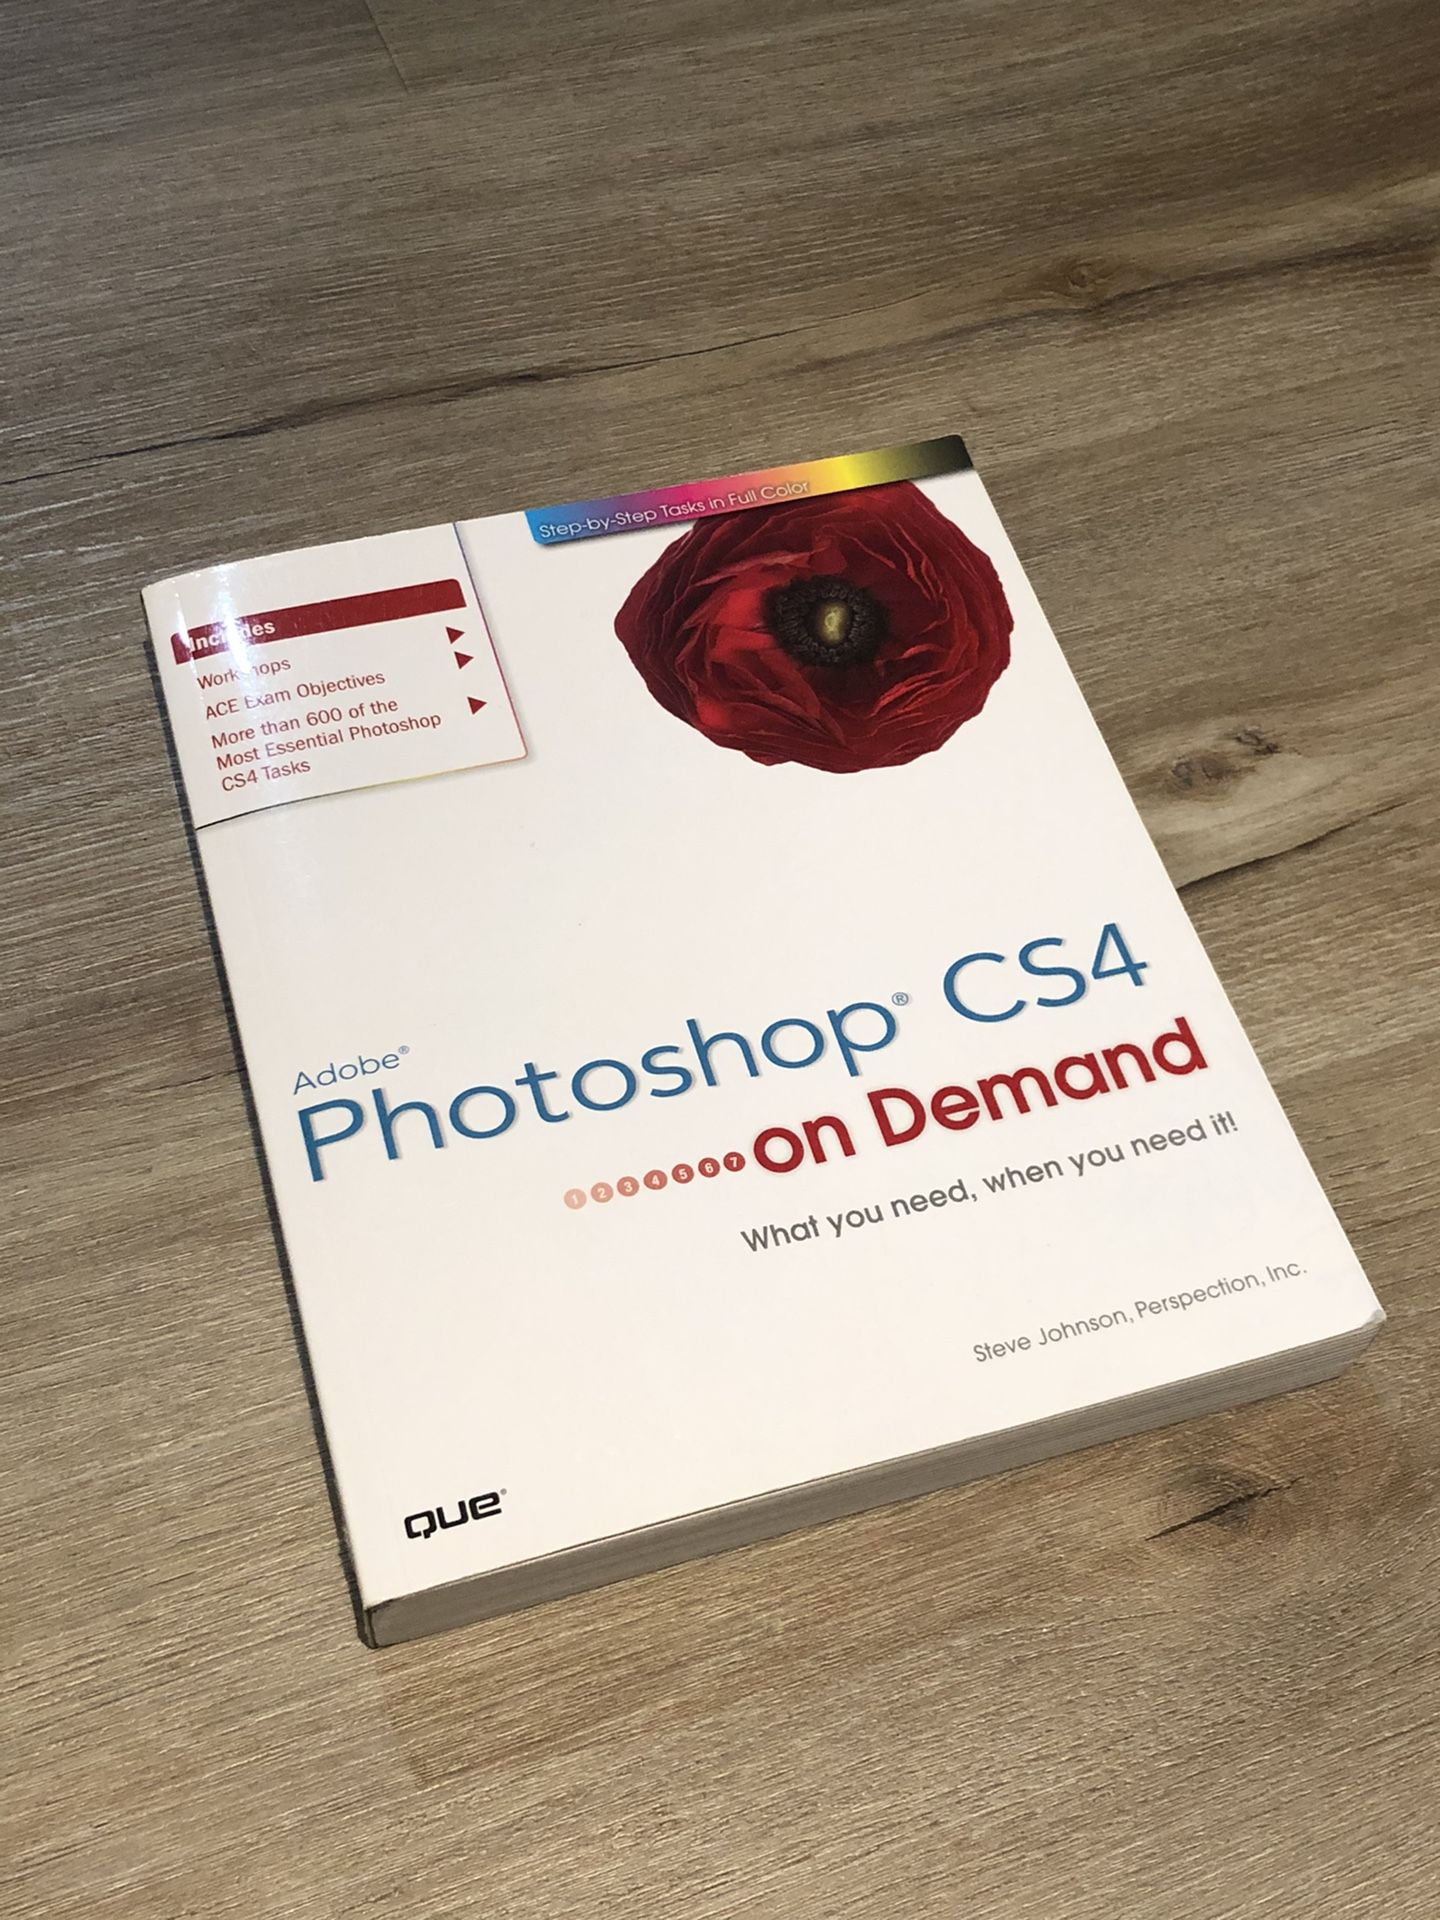 Adobe Photoshop CS4 On Demand